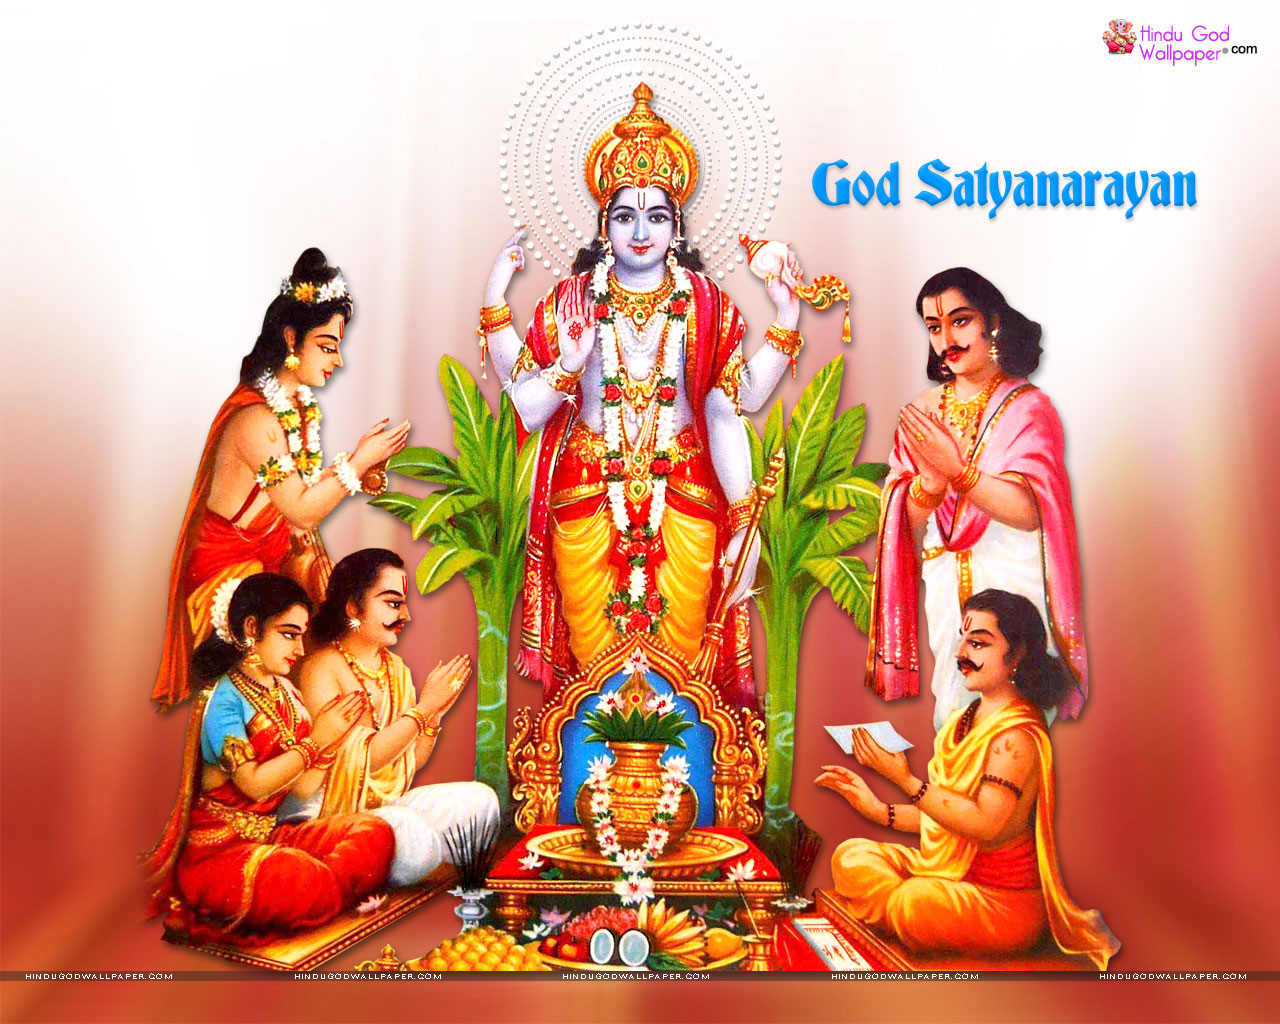 Satyanarayana Bhagwan Wallpaper Free Download